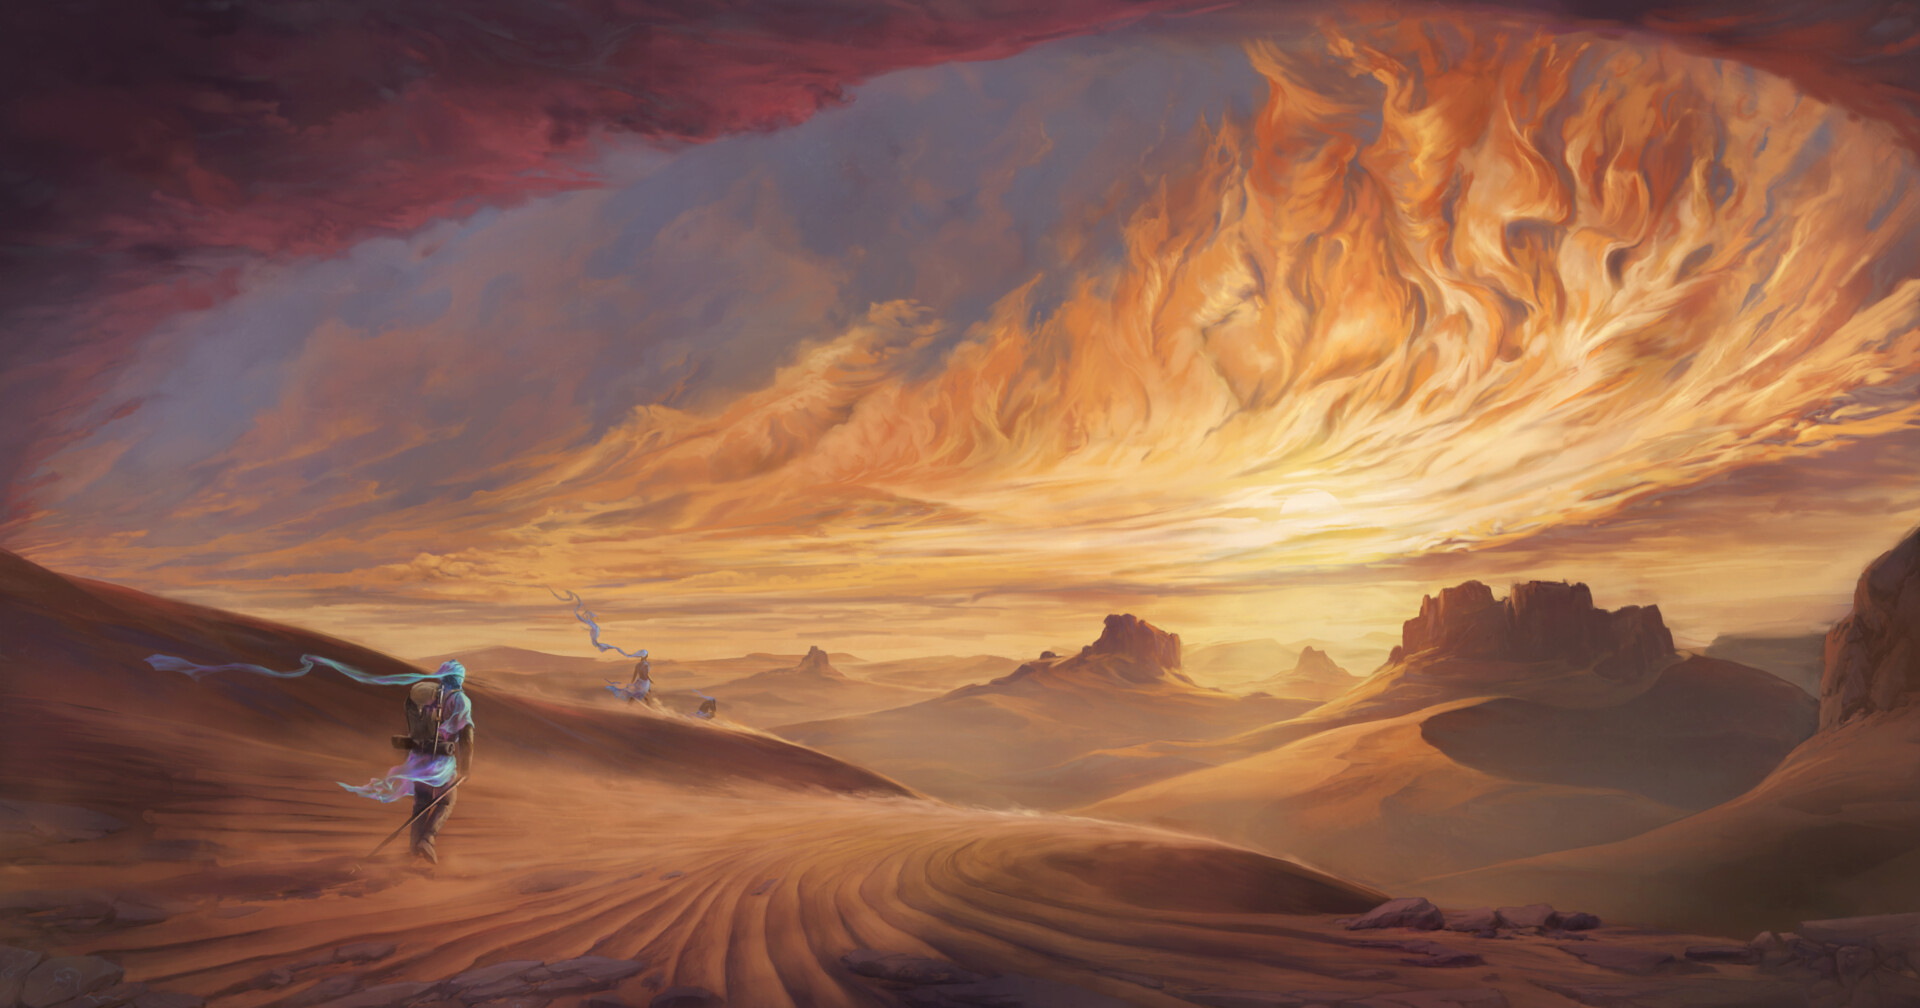 General 1920x1008 Tristan Delgado digital art fantasy art landscape desert dunes clouds sunset sunset glow sand